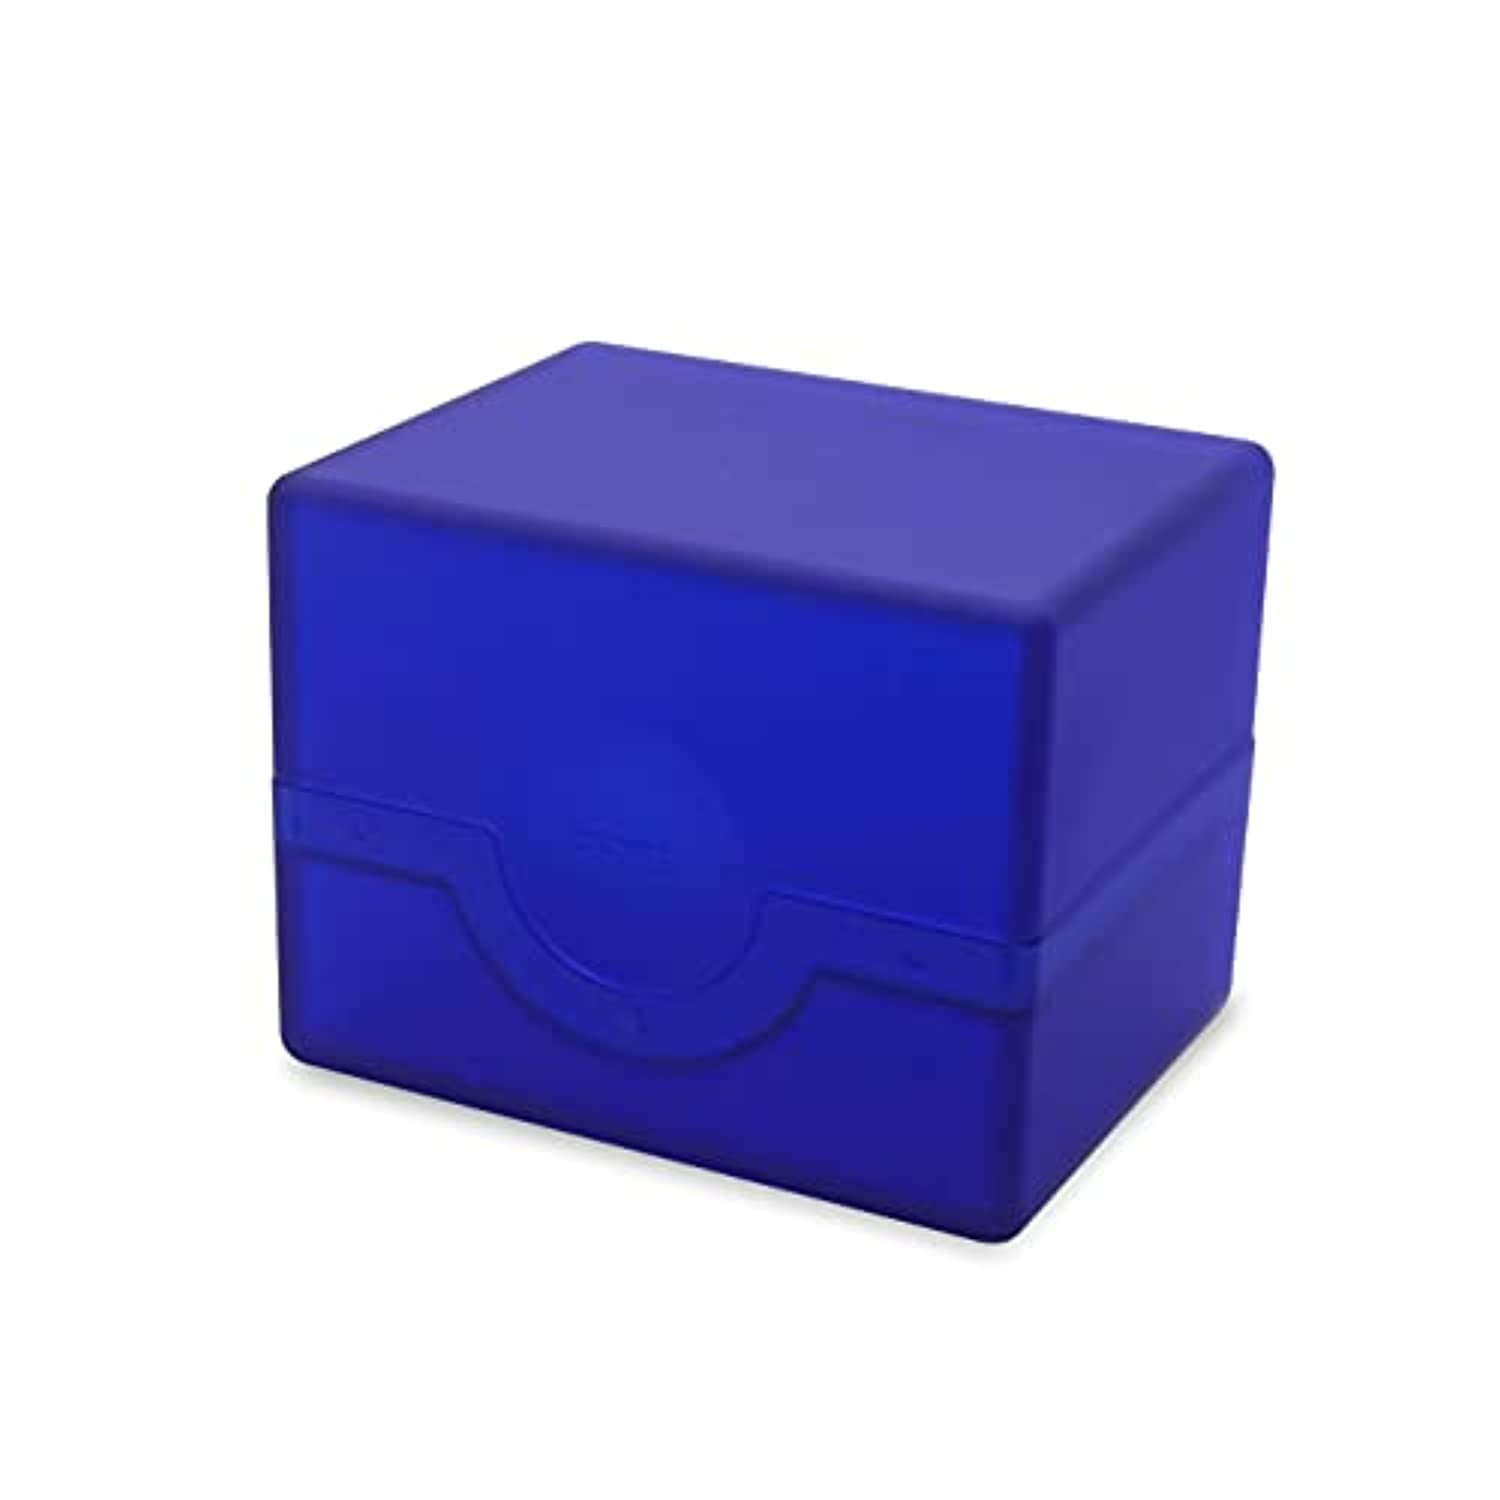 1 BCW Large Deck Case BLUE MTG CCG Pokemon Protector Storage Box holds 100 